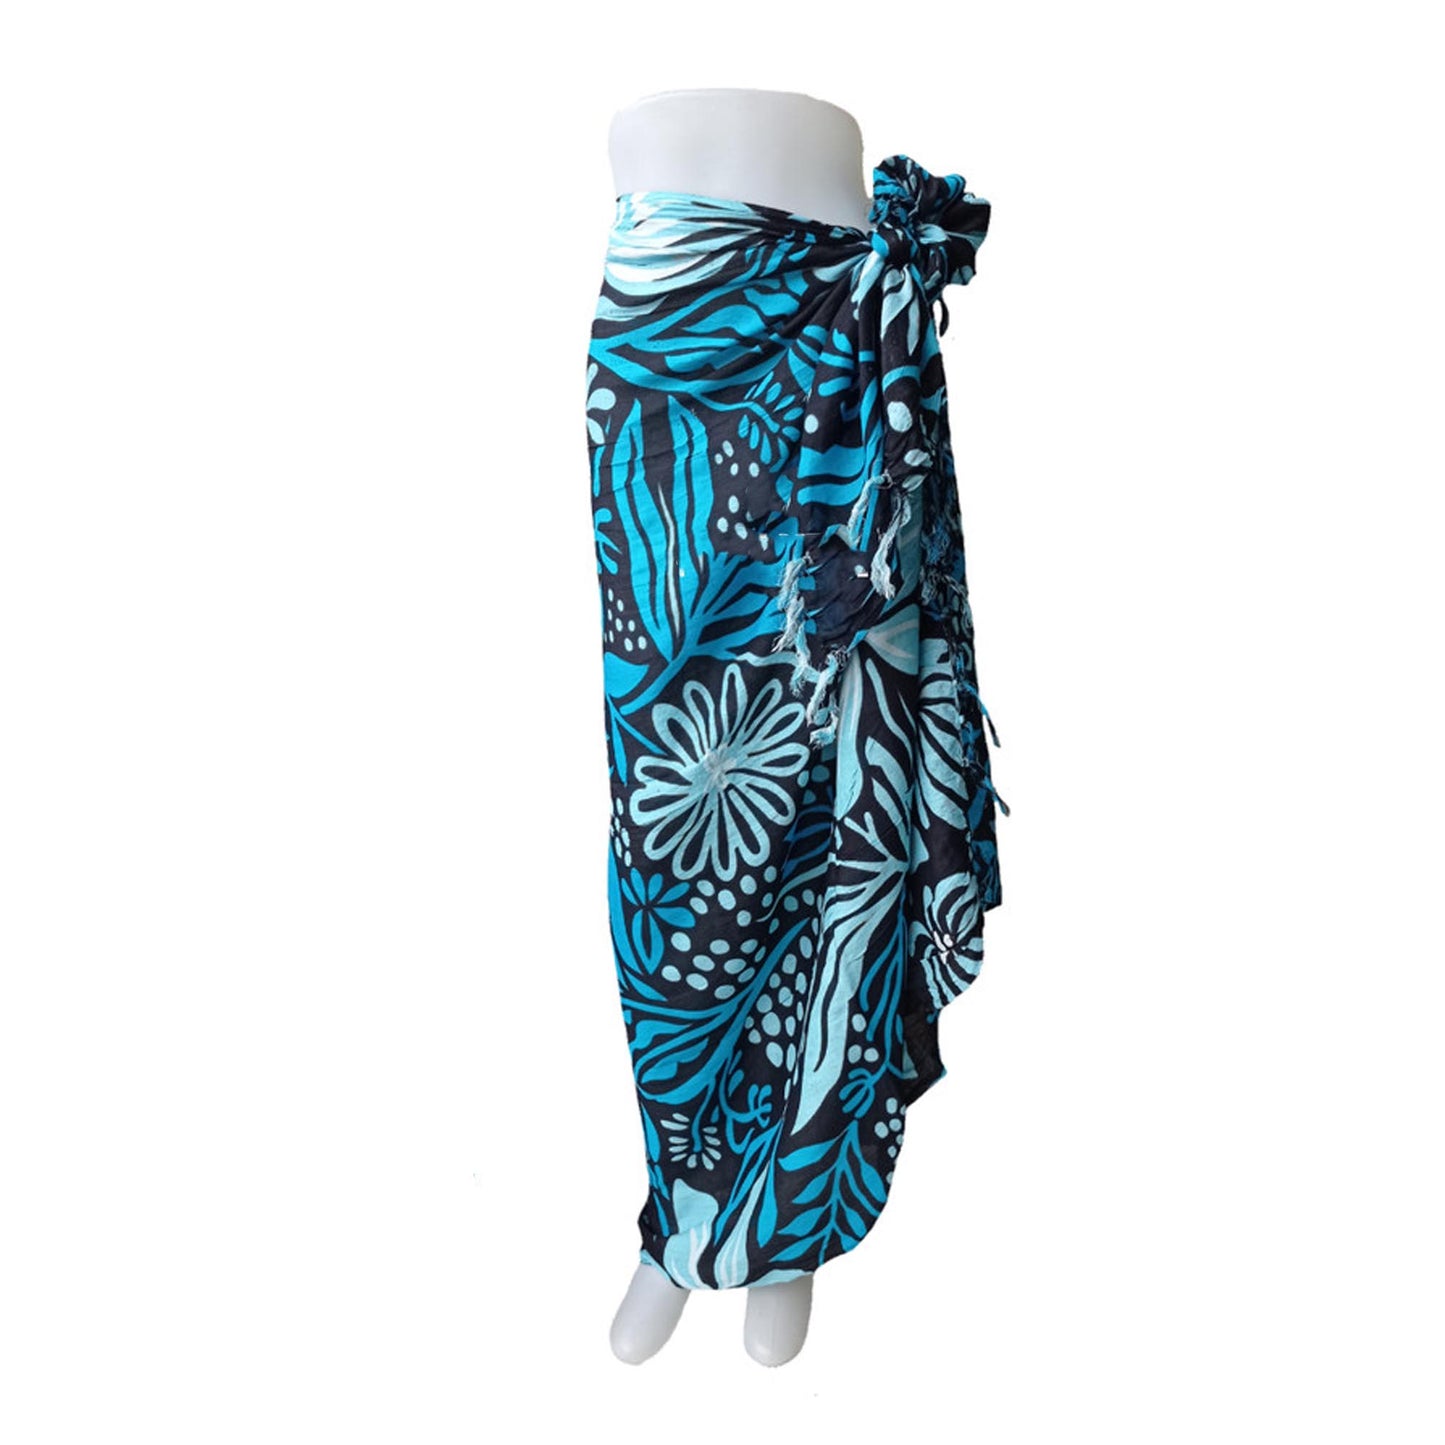 Beach Charm: Flower Motif Balinese Fabric for a Cheerful Holiday, Sarong, Beach Cover-Up, Balinese Beach Wrap, Beach Sarong, Pareo